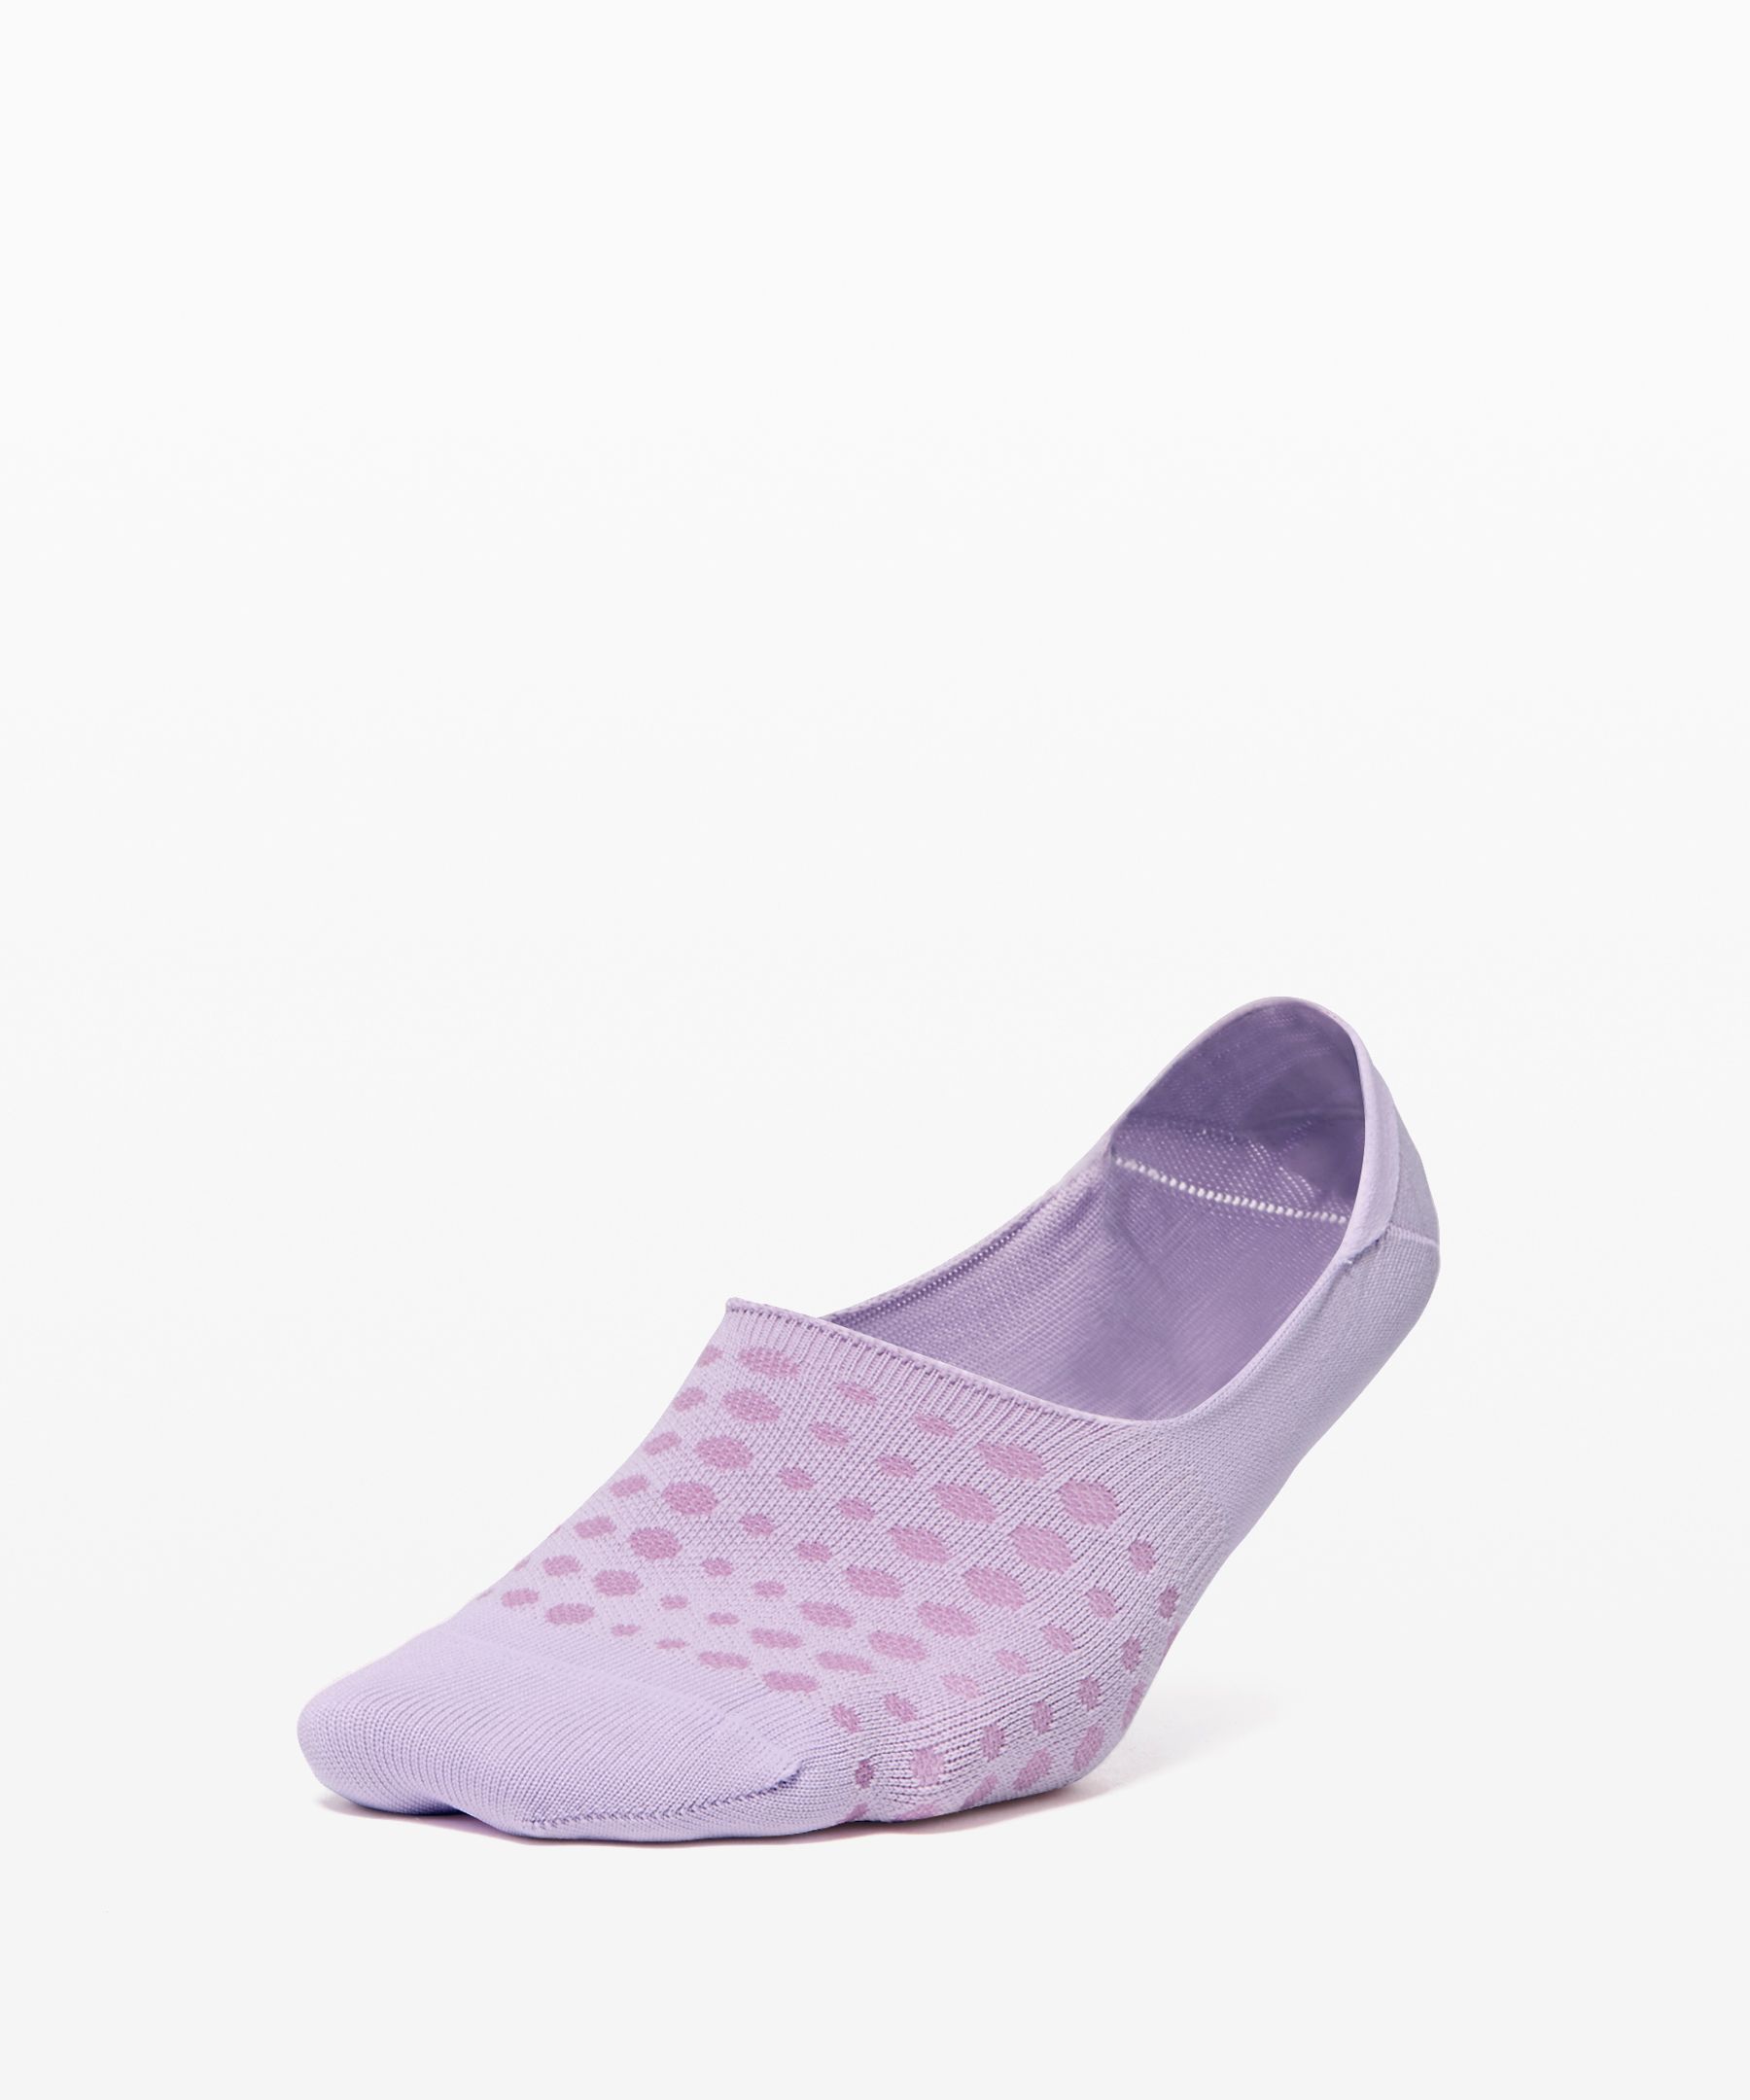 Lululemon Secret Sock In Sheer Violet/jubilee